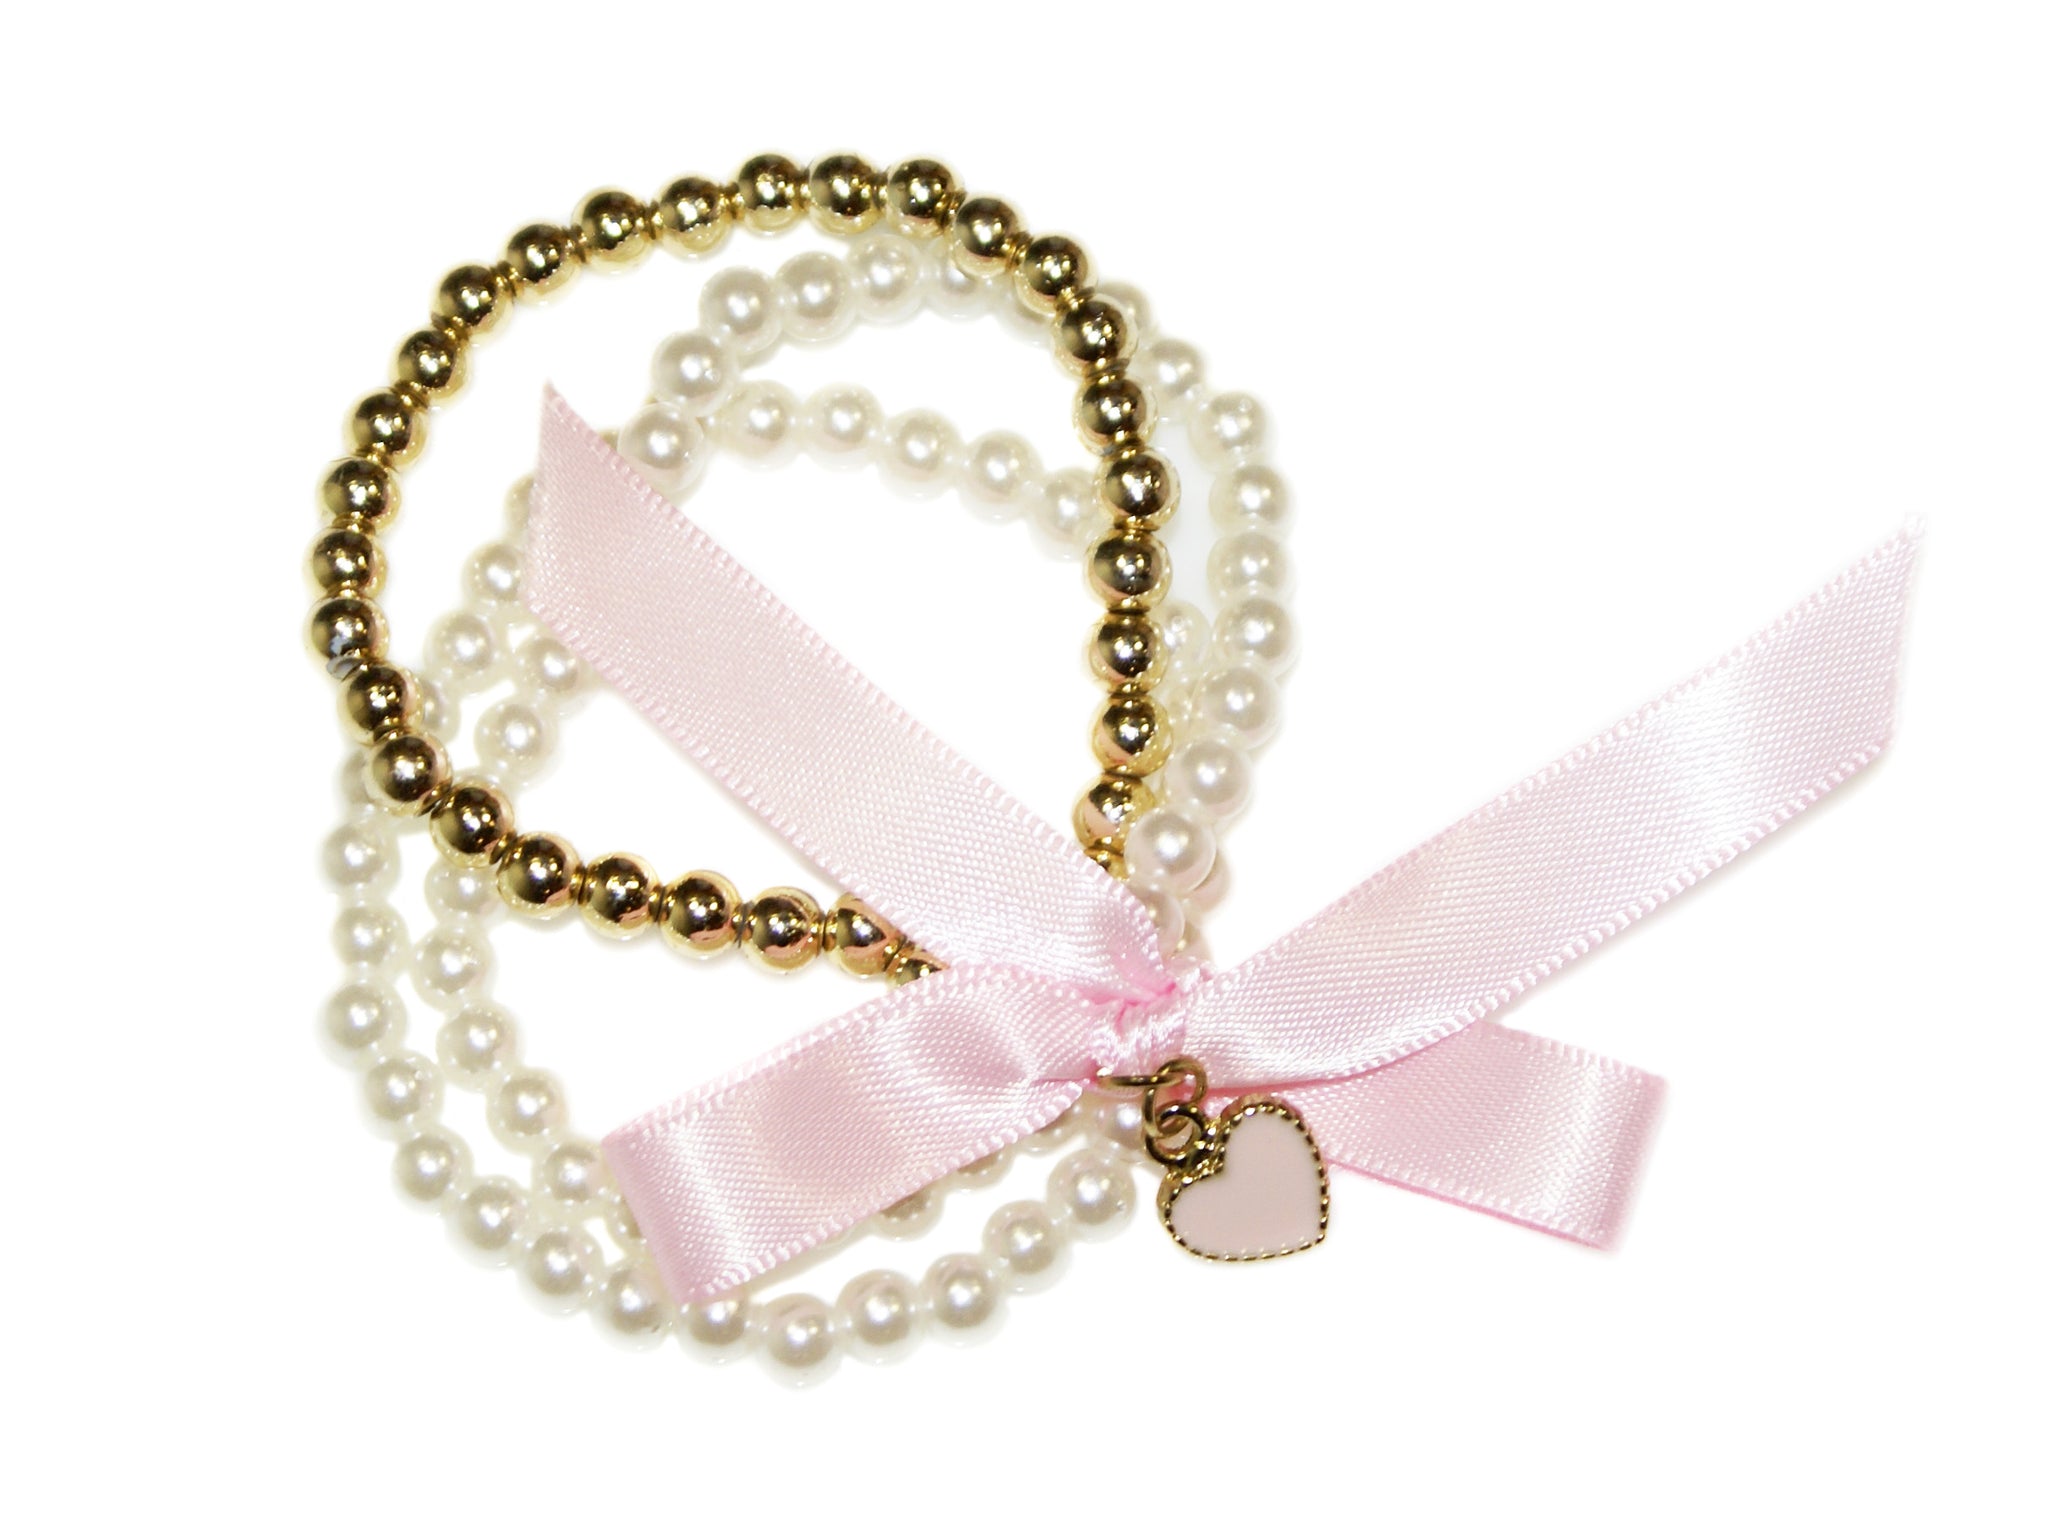 Bow & Heart 3 Line Bracelet - Pink/Gold/Pearl